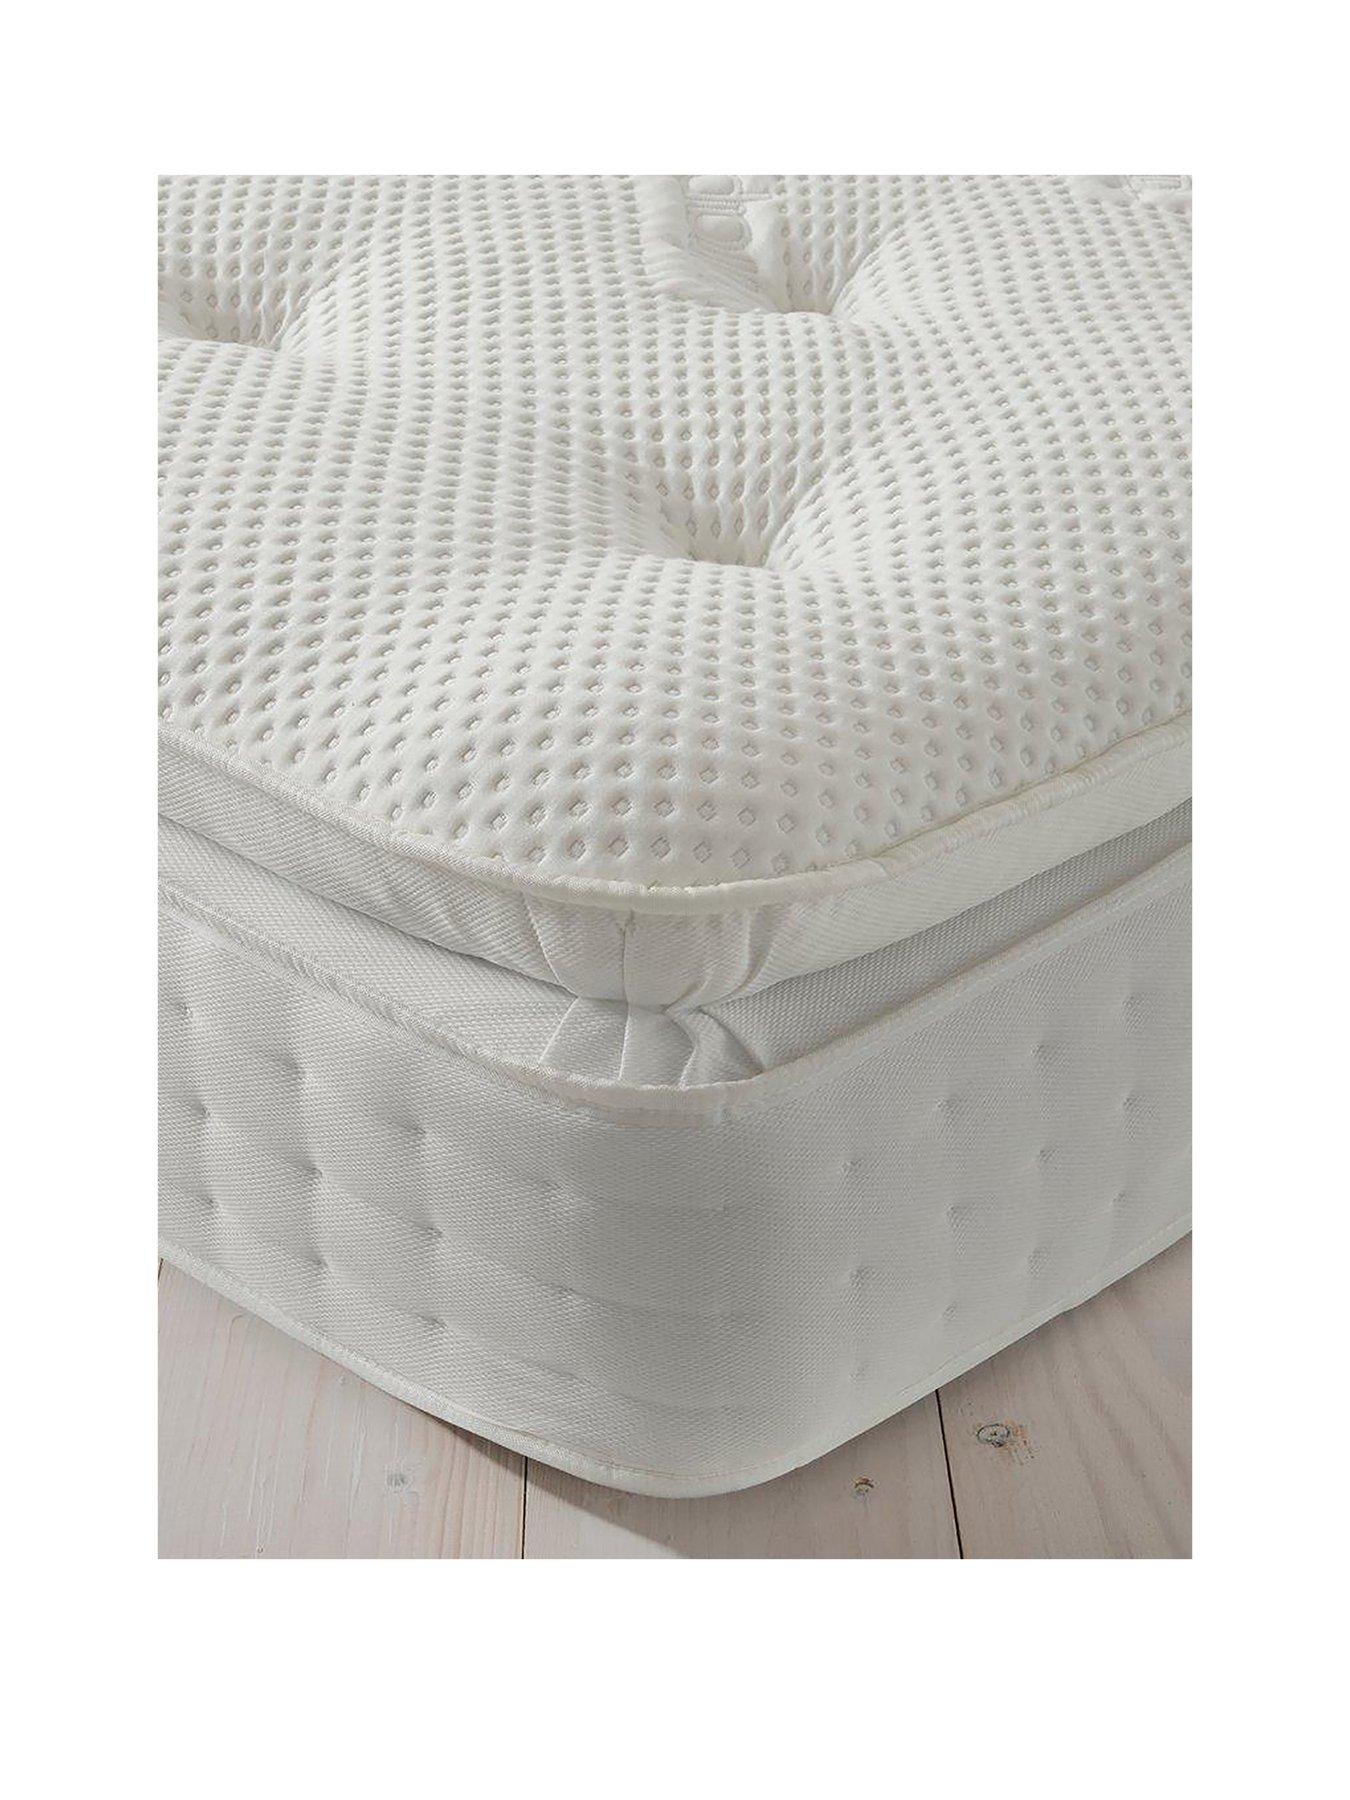 140x70 cot mattress